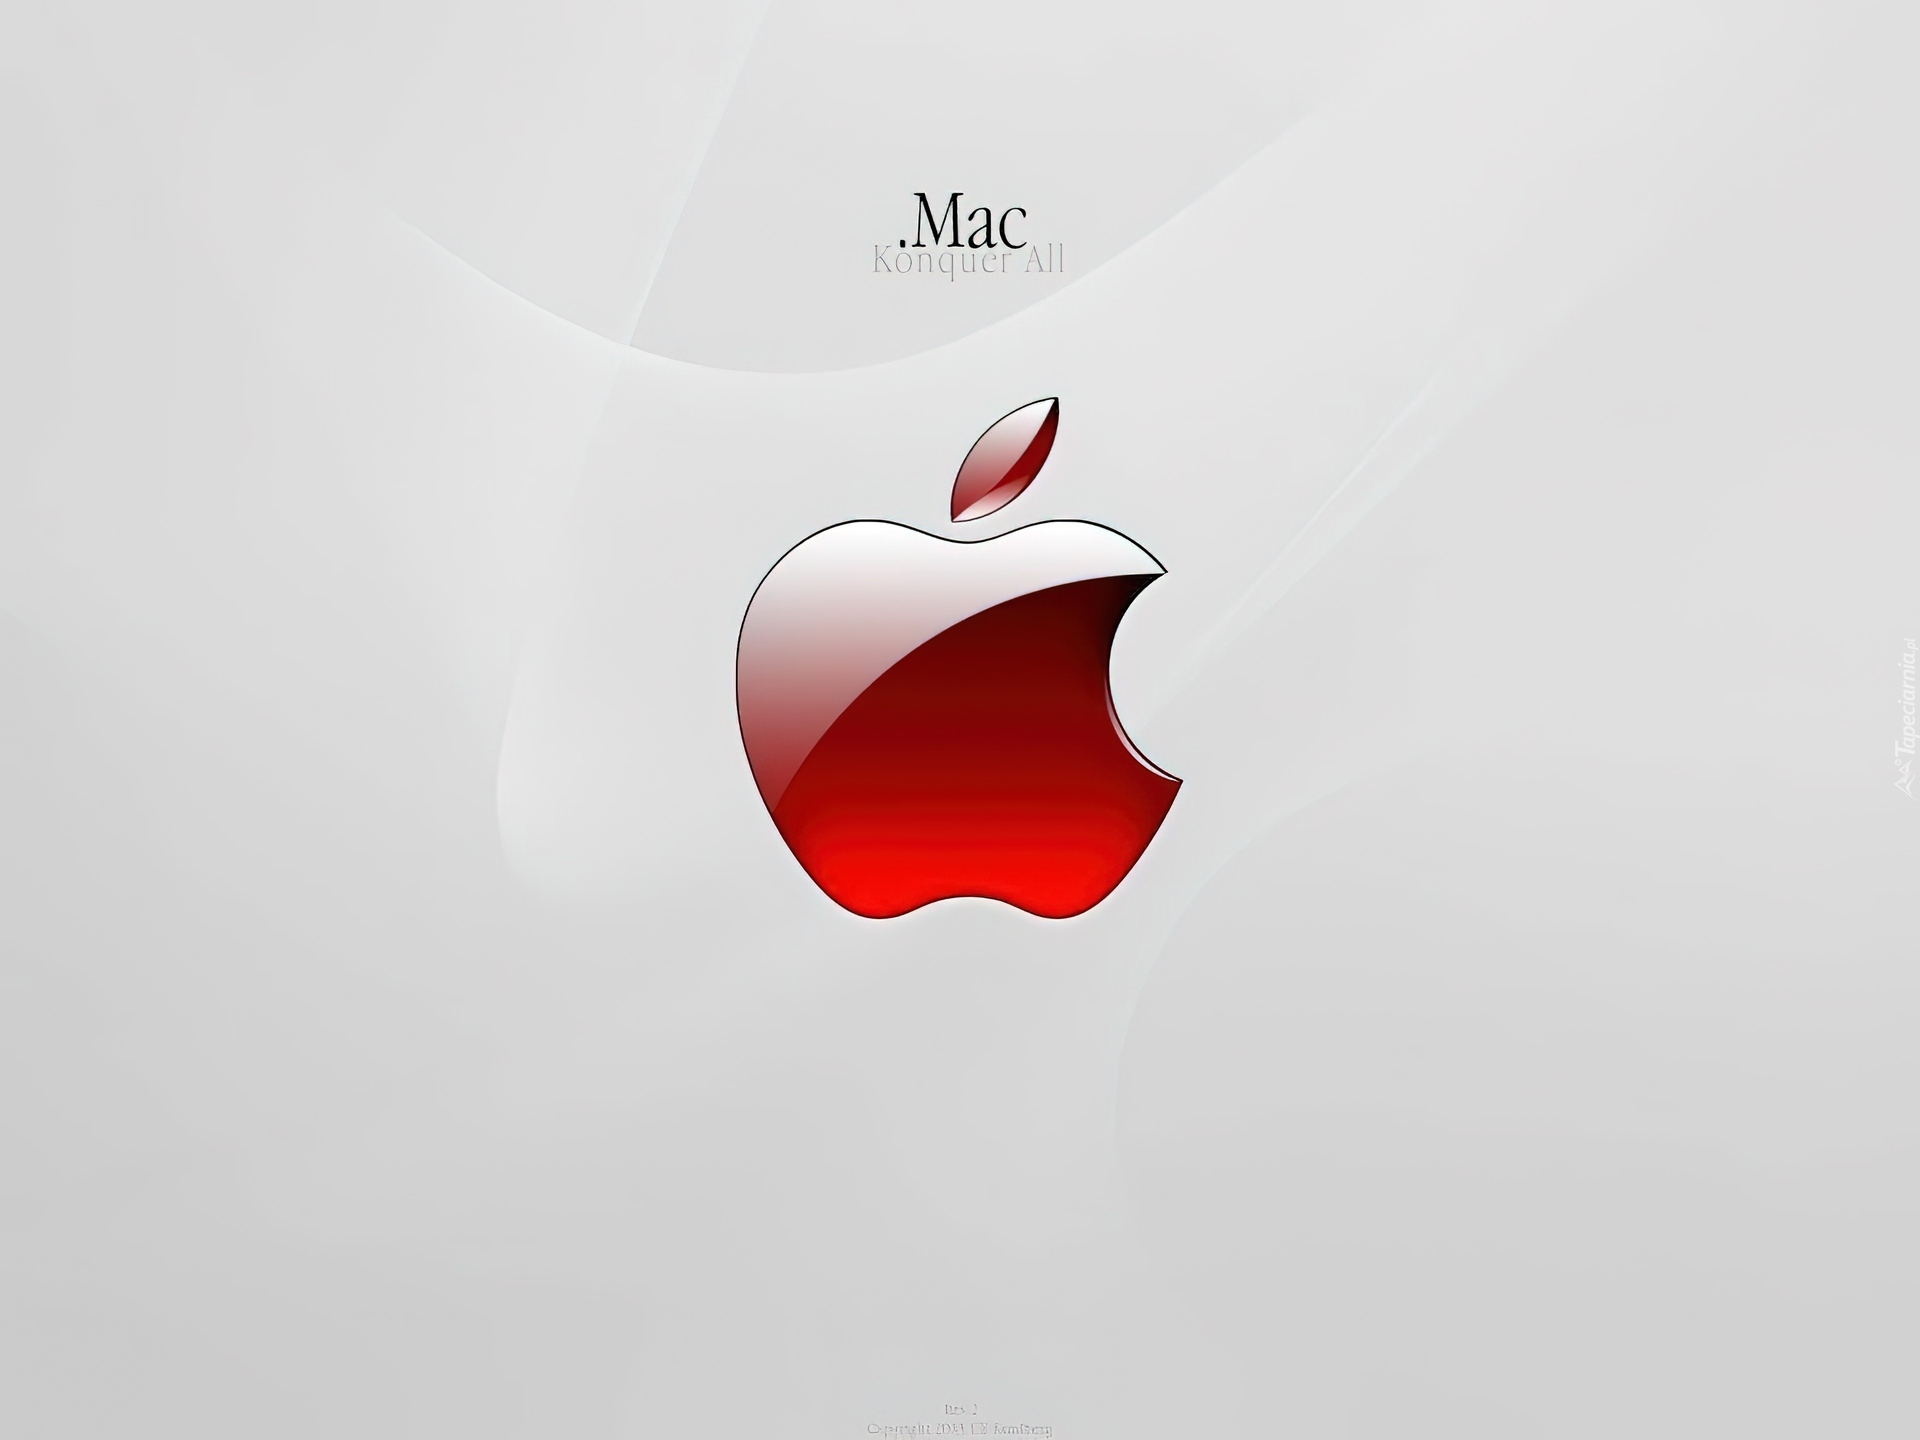 Найти картинку айфона. Логотип Apple. Заставка на айфон. Обои Apple. Заставка эпл.